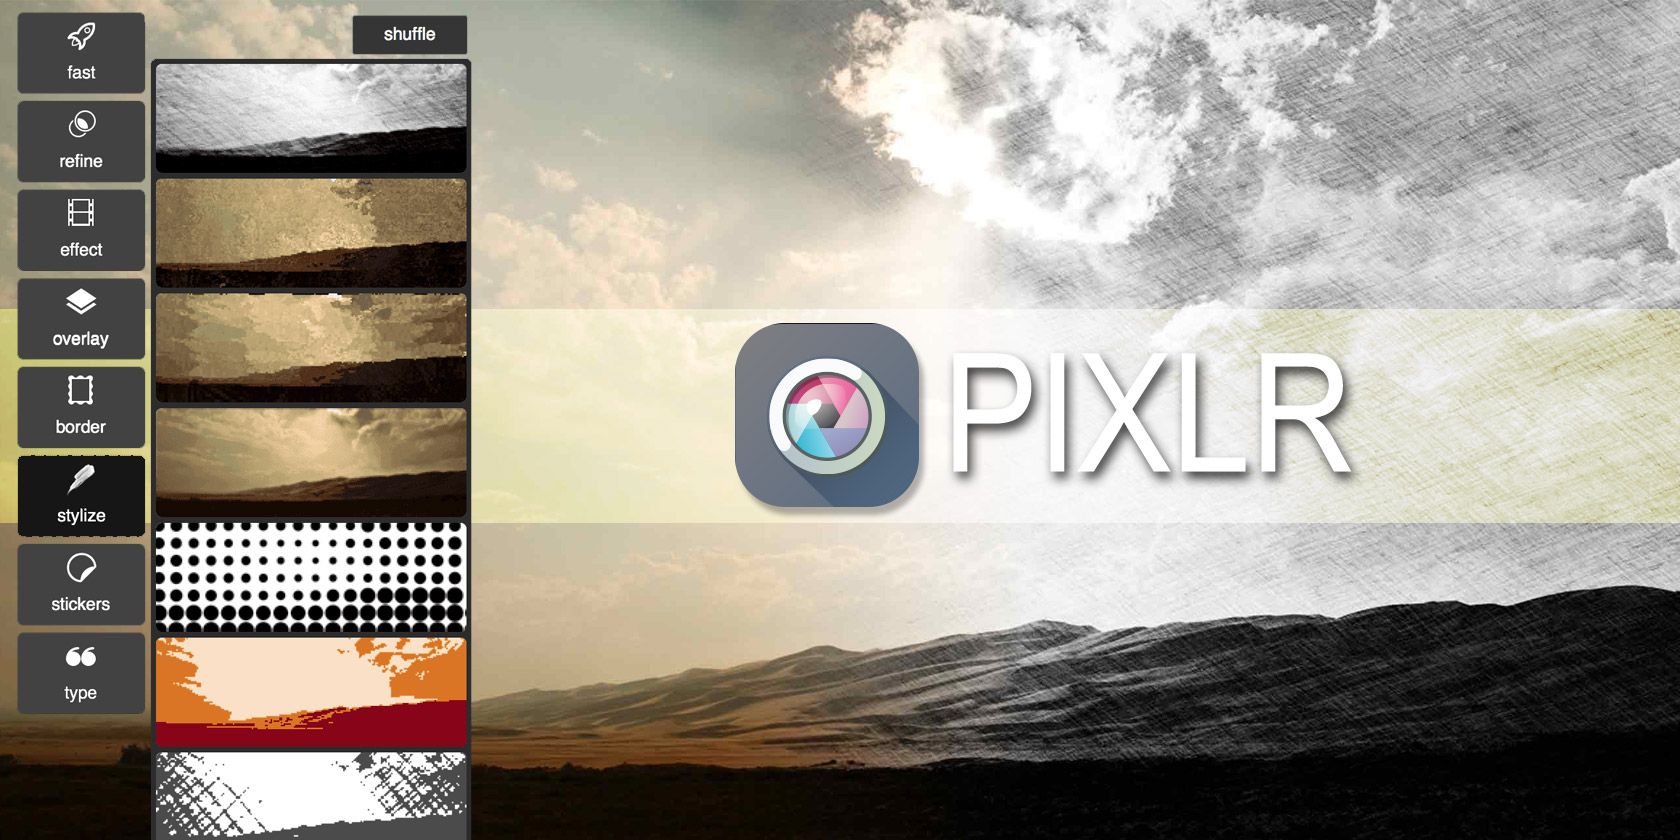 autodesk pixlr free download windows 10